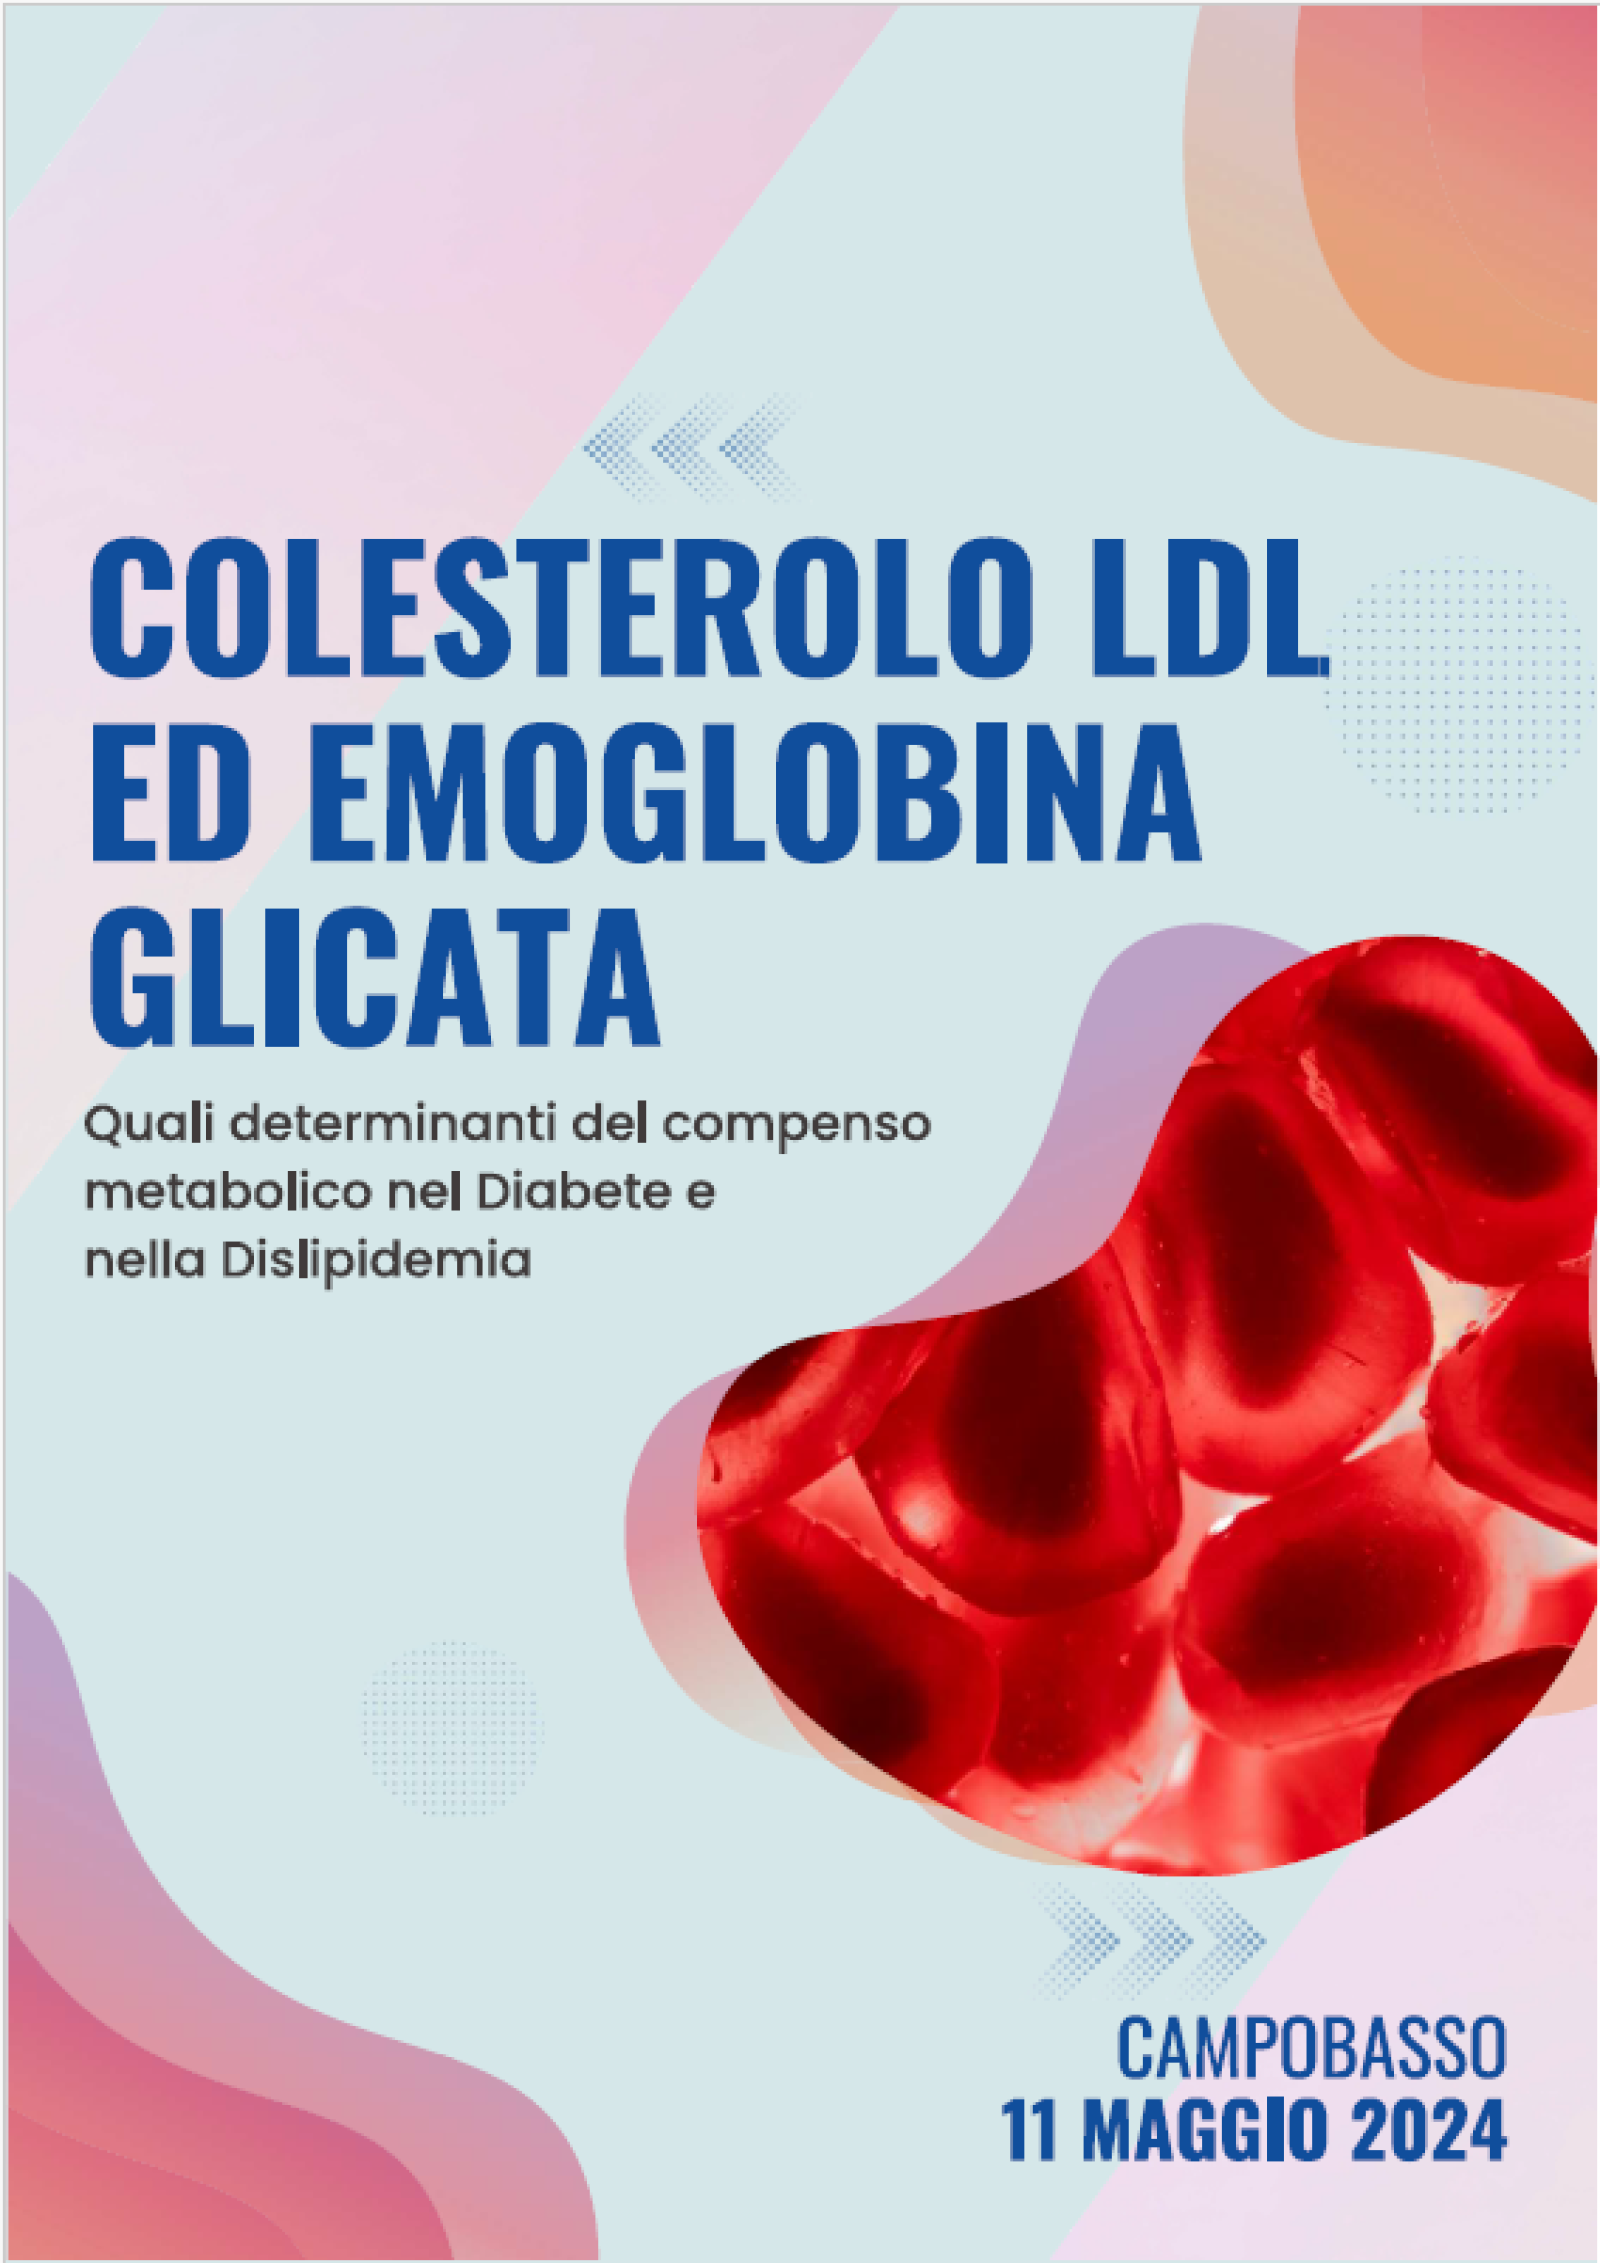 Evento ECM: “COLESTEROLO LDL ED EMOGLOBINA GLICATA”